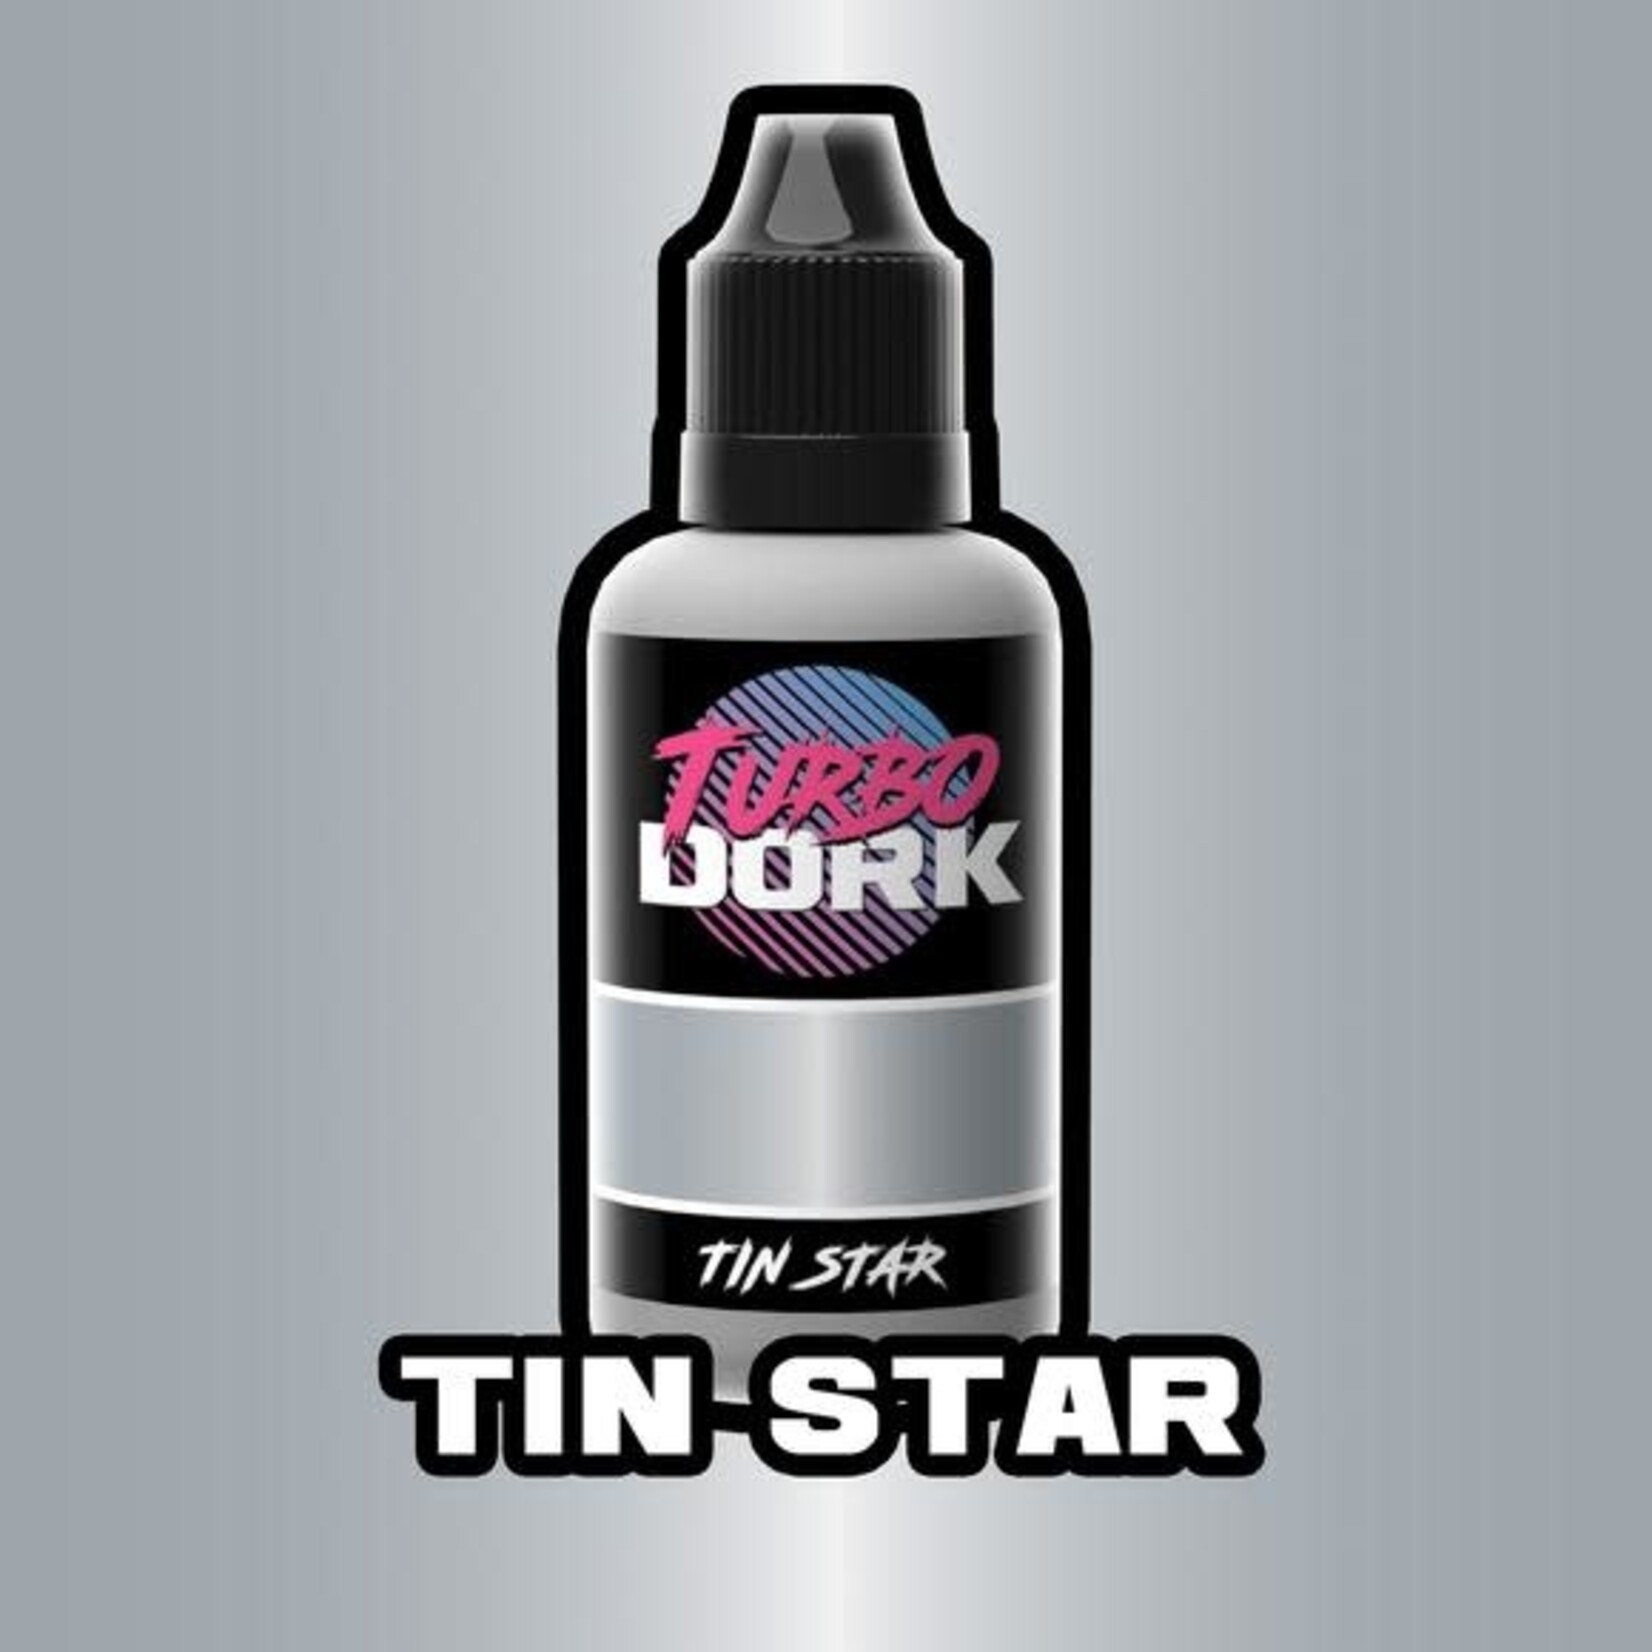 Turbo Dork Turbo Dork Metallic: Tin Star